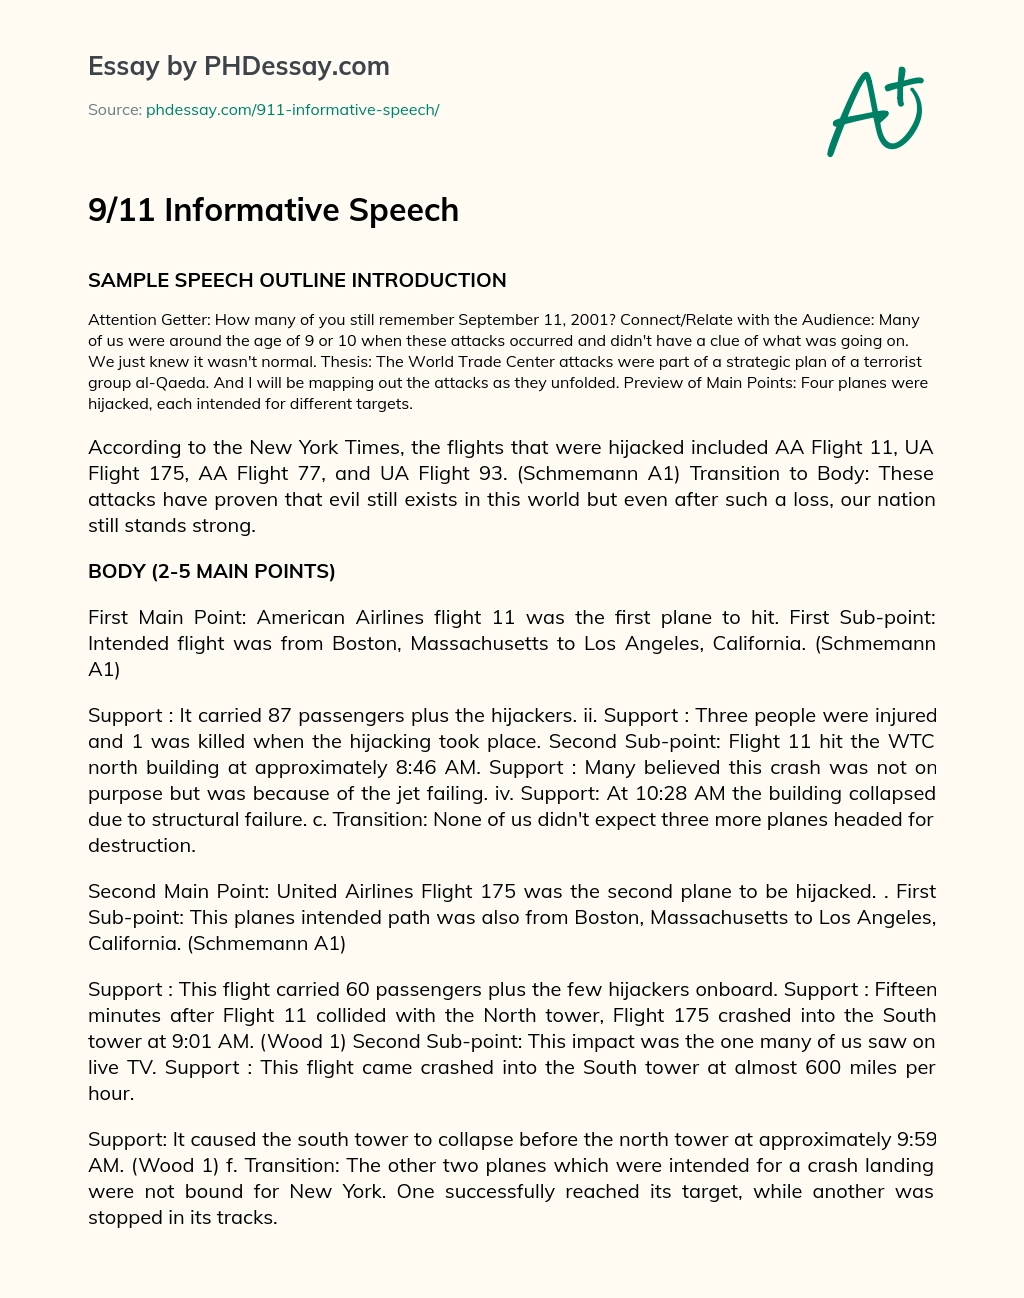 9/11 Informative Speech essay